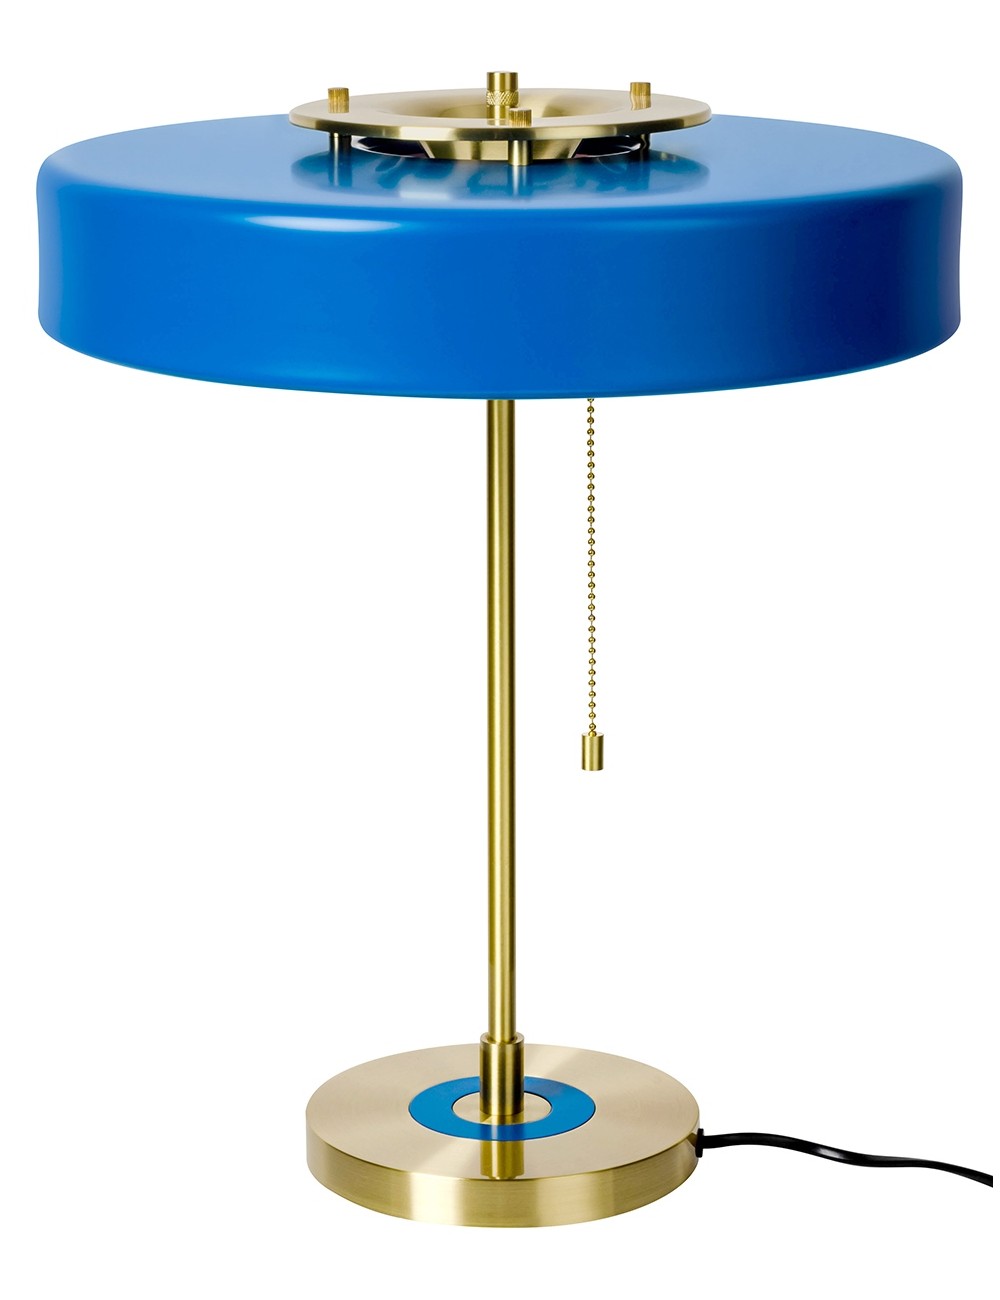 Lampa biurkowa ARTE niebieska - aluminium, szkło